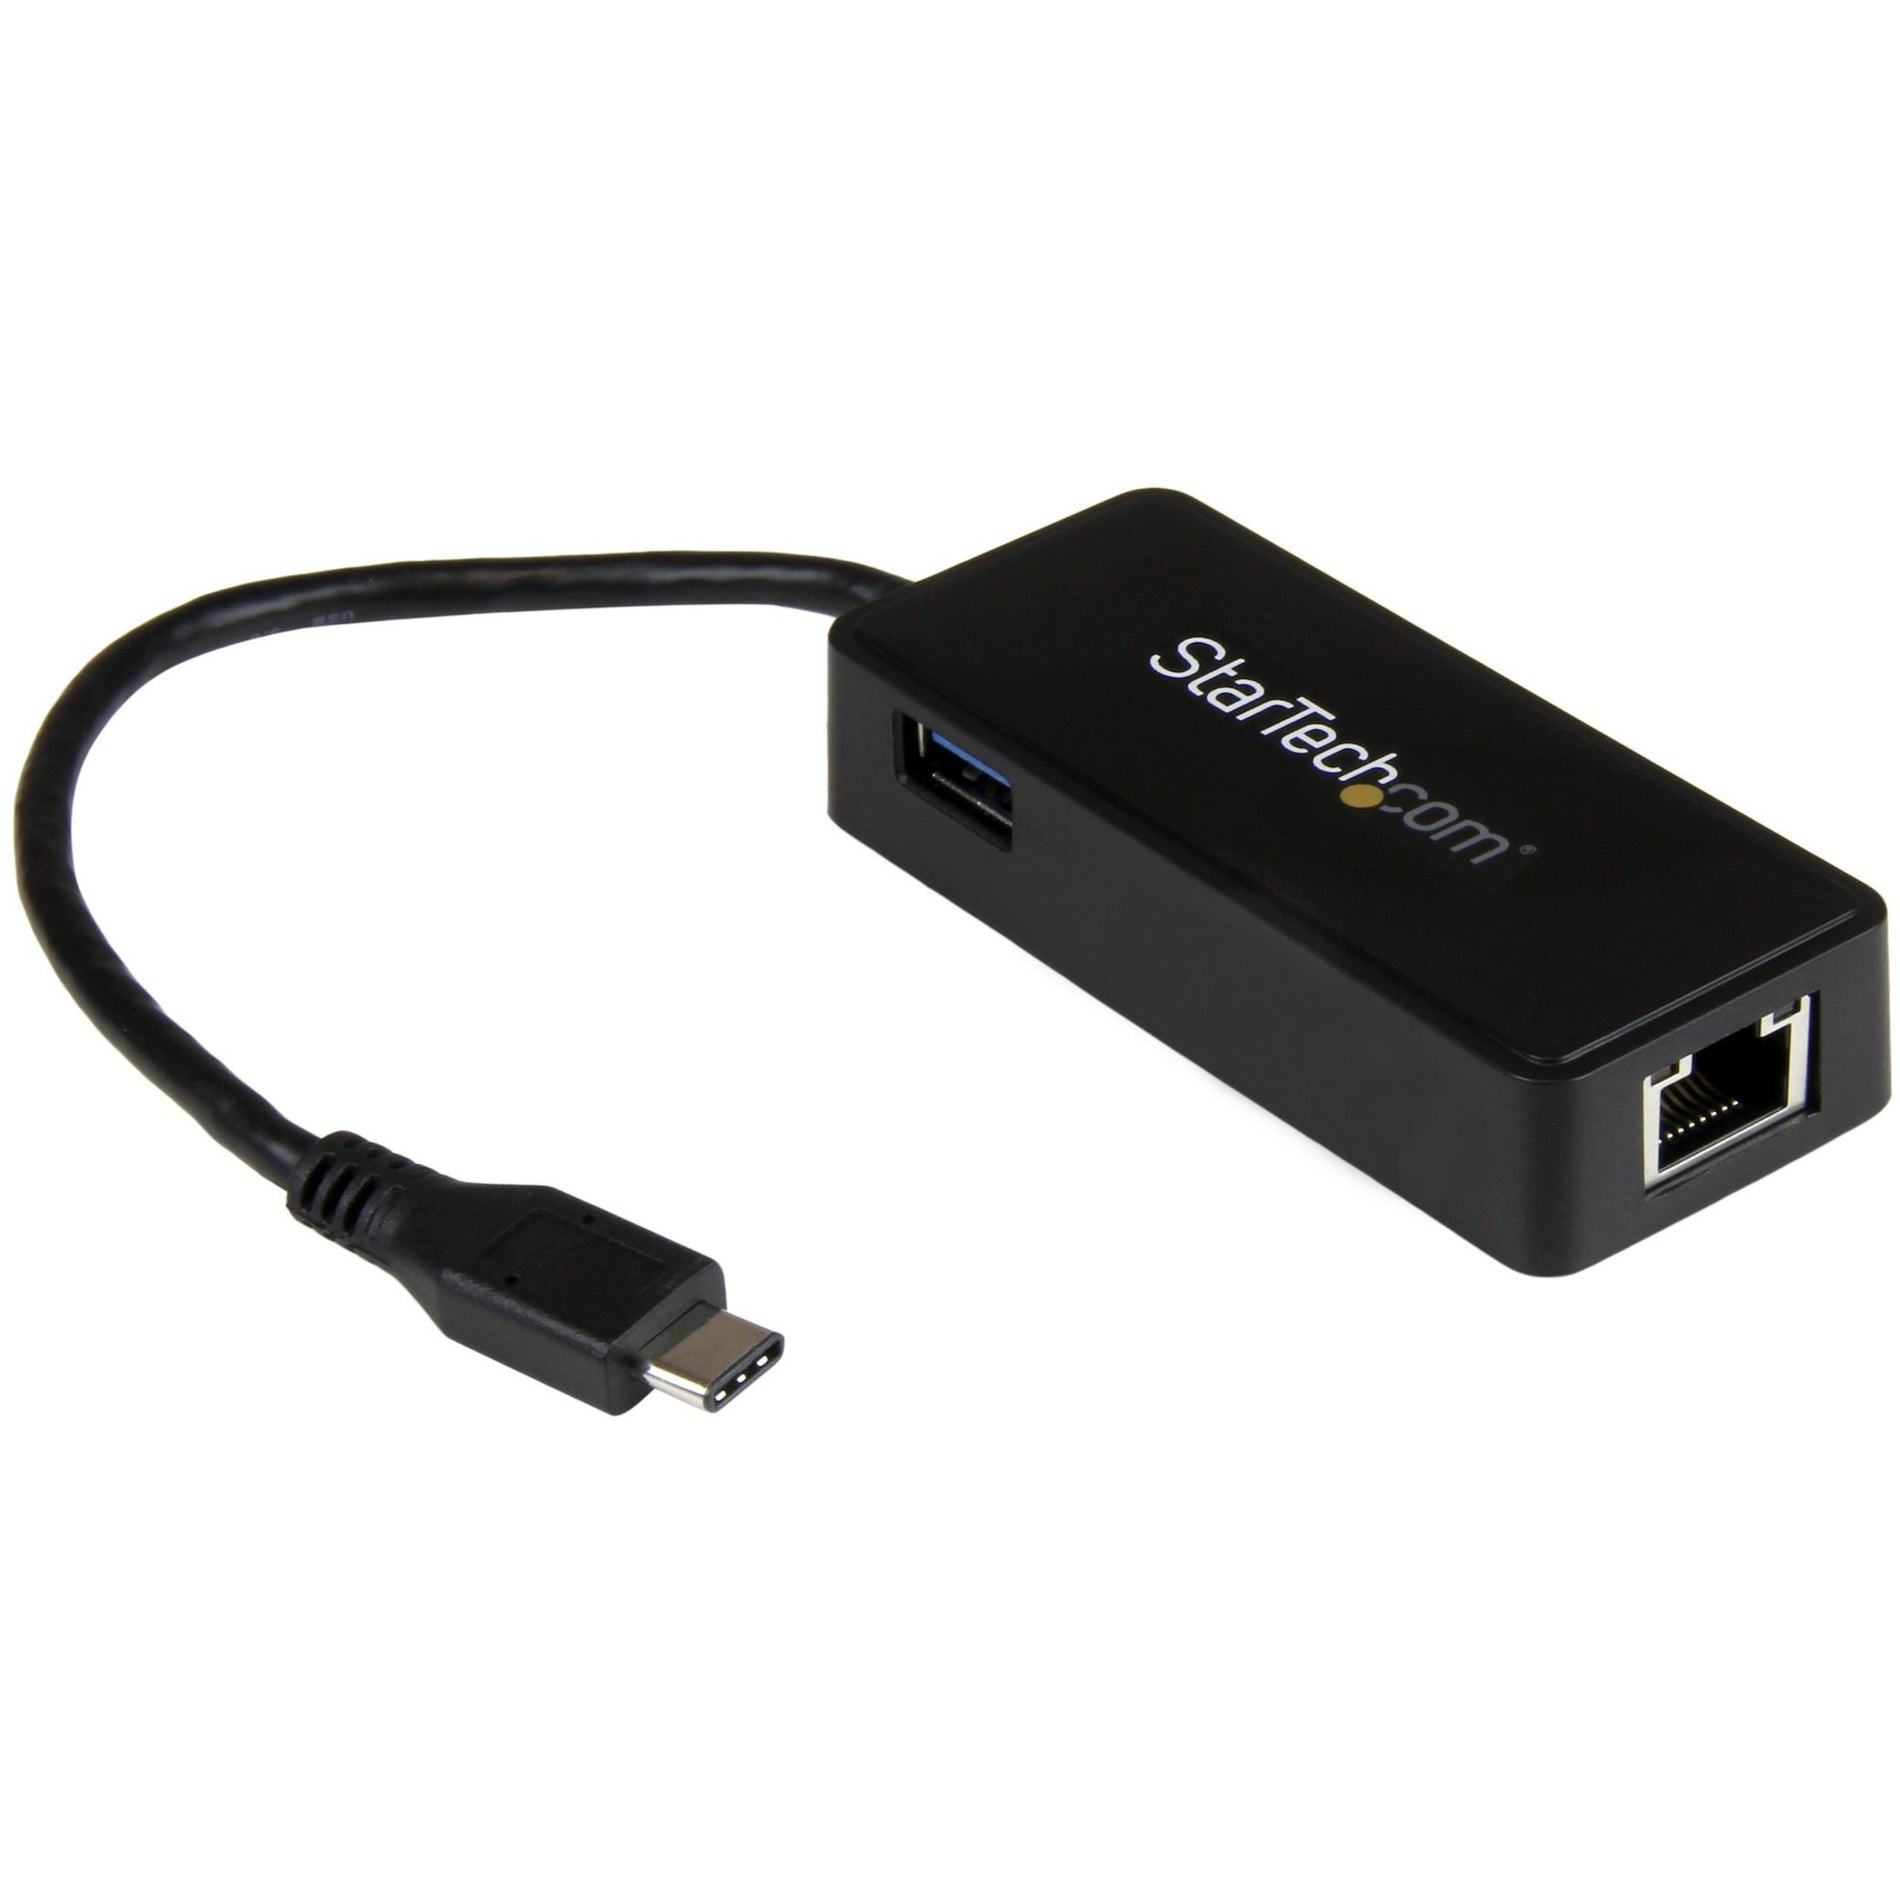 StarTech.com US1GC301AU USB-C to Gigabit Network Adapter with Extra USB 3.0 Port - Black, USB 3.1 Type-C Gen 1 (5 Gbps)